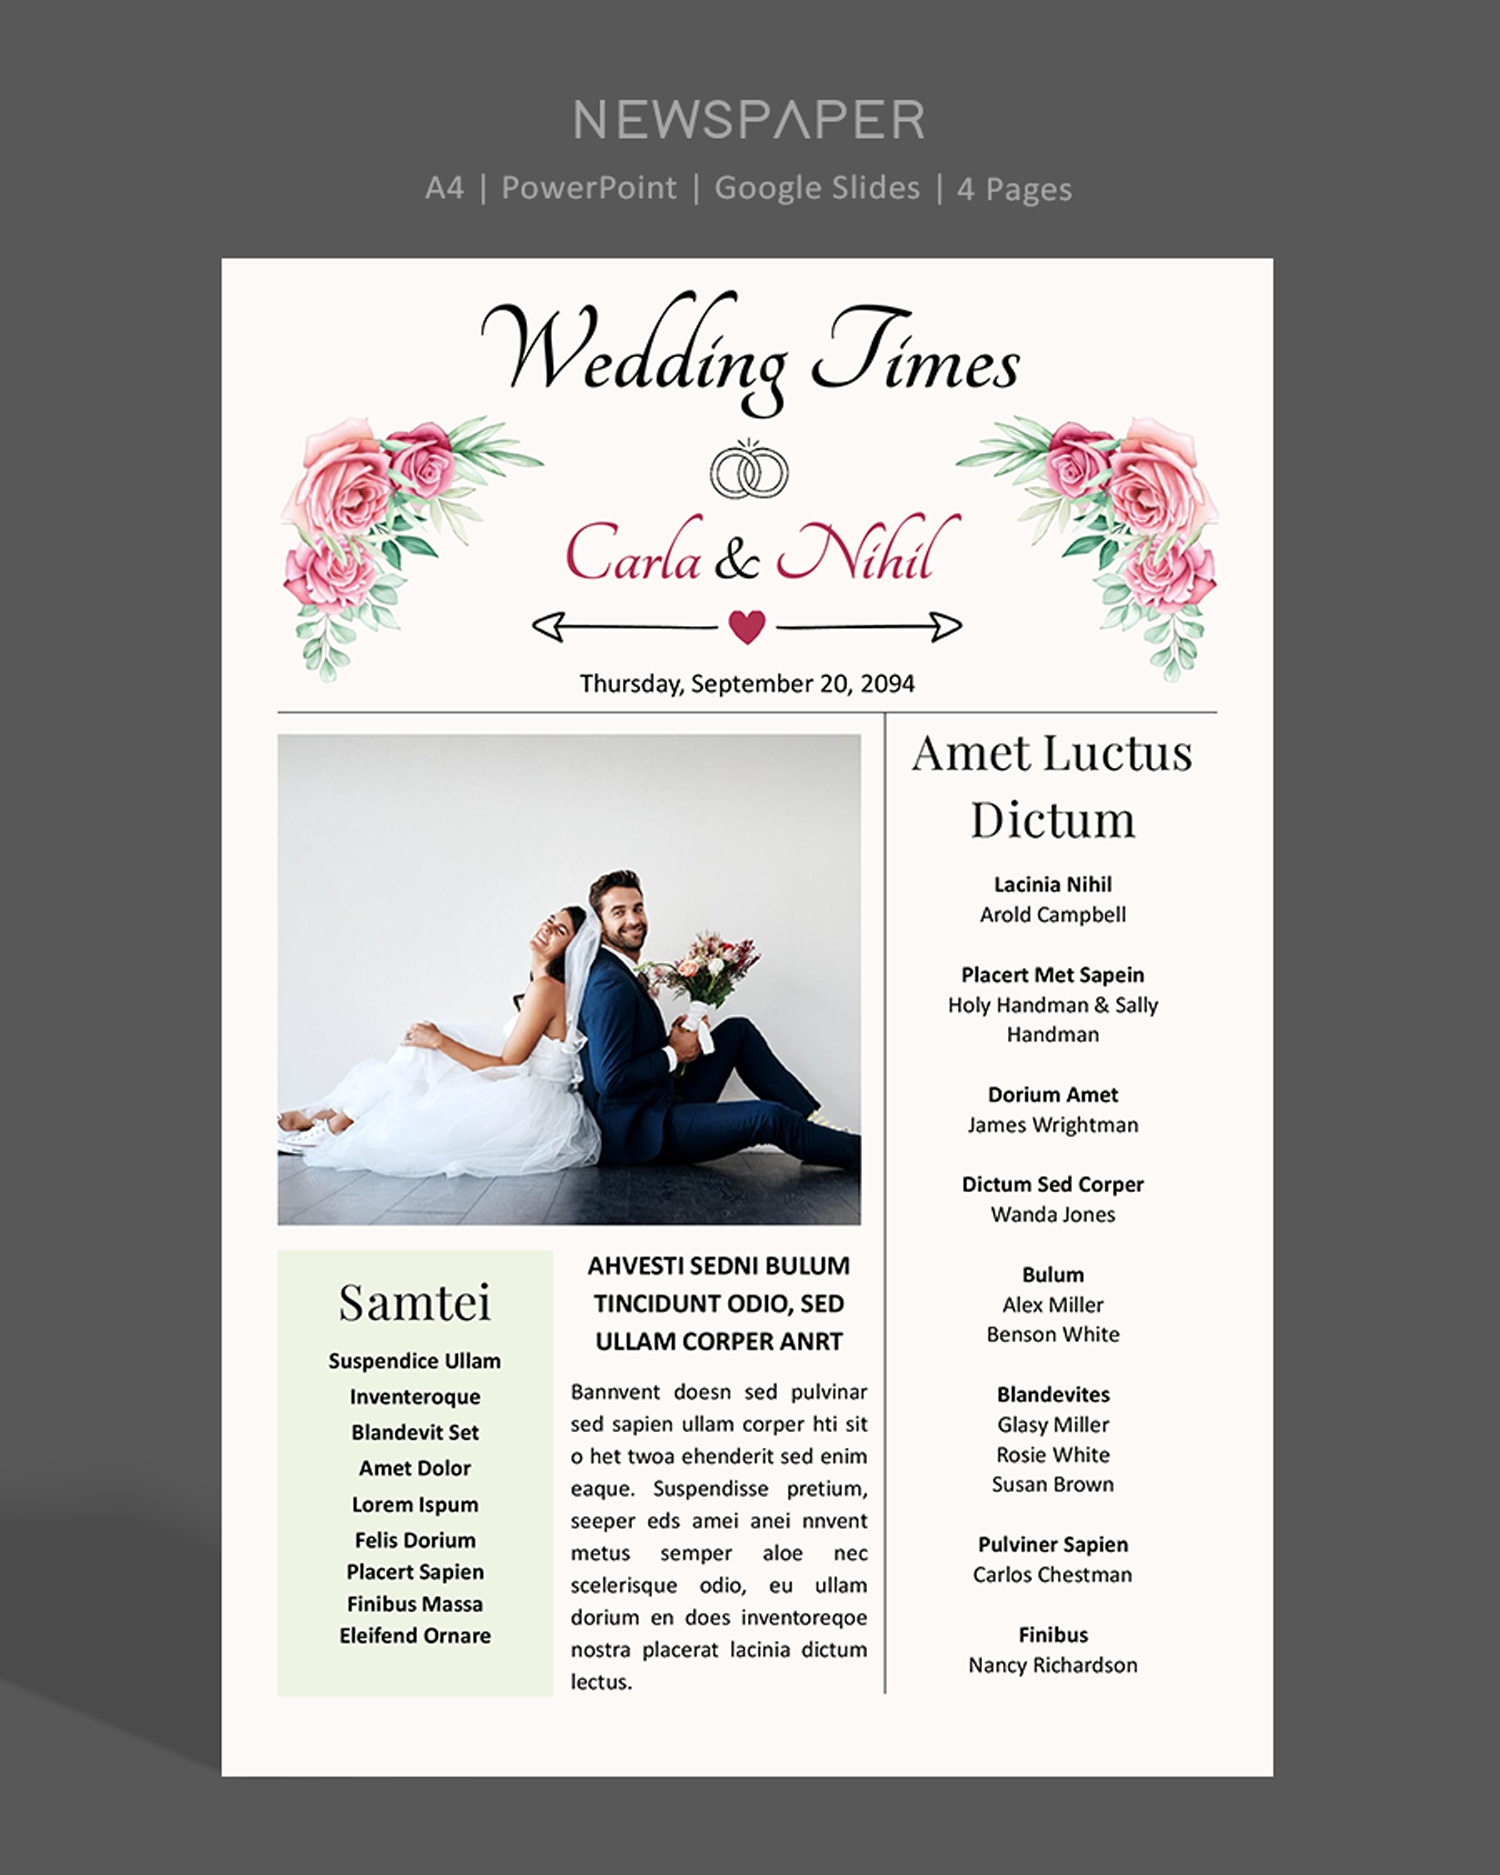 Modern Wedding Newspaper Template - PowerPoint, Google Slides